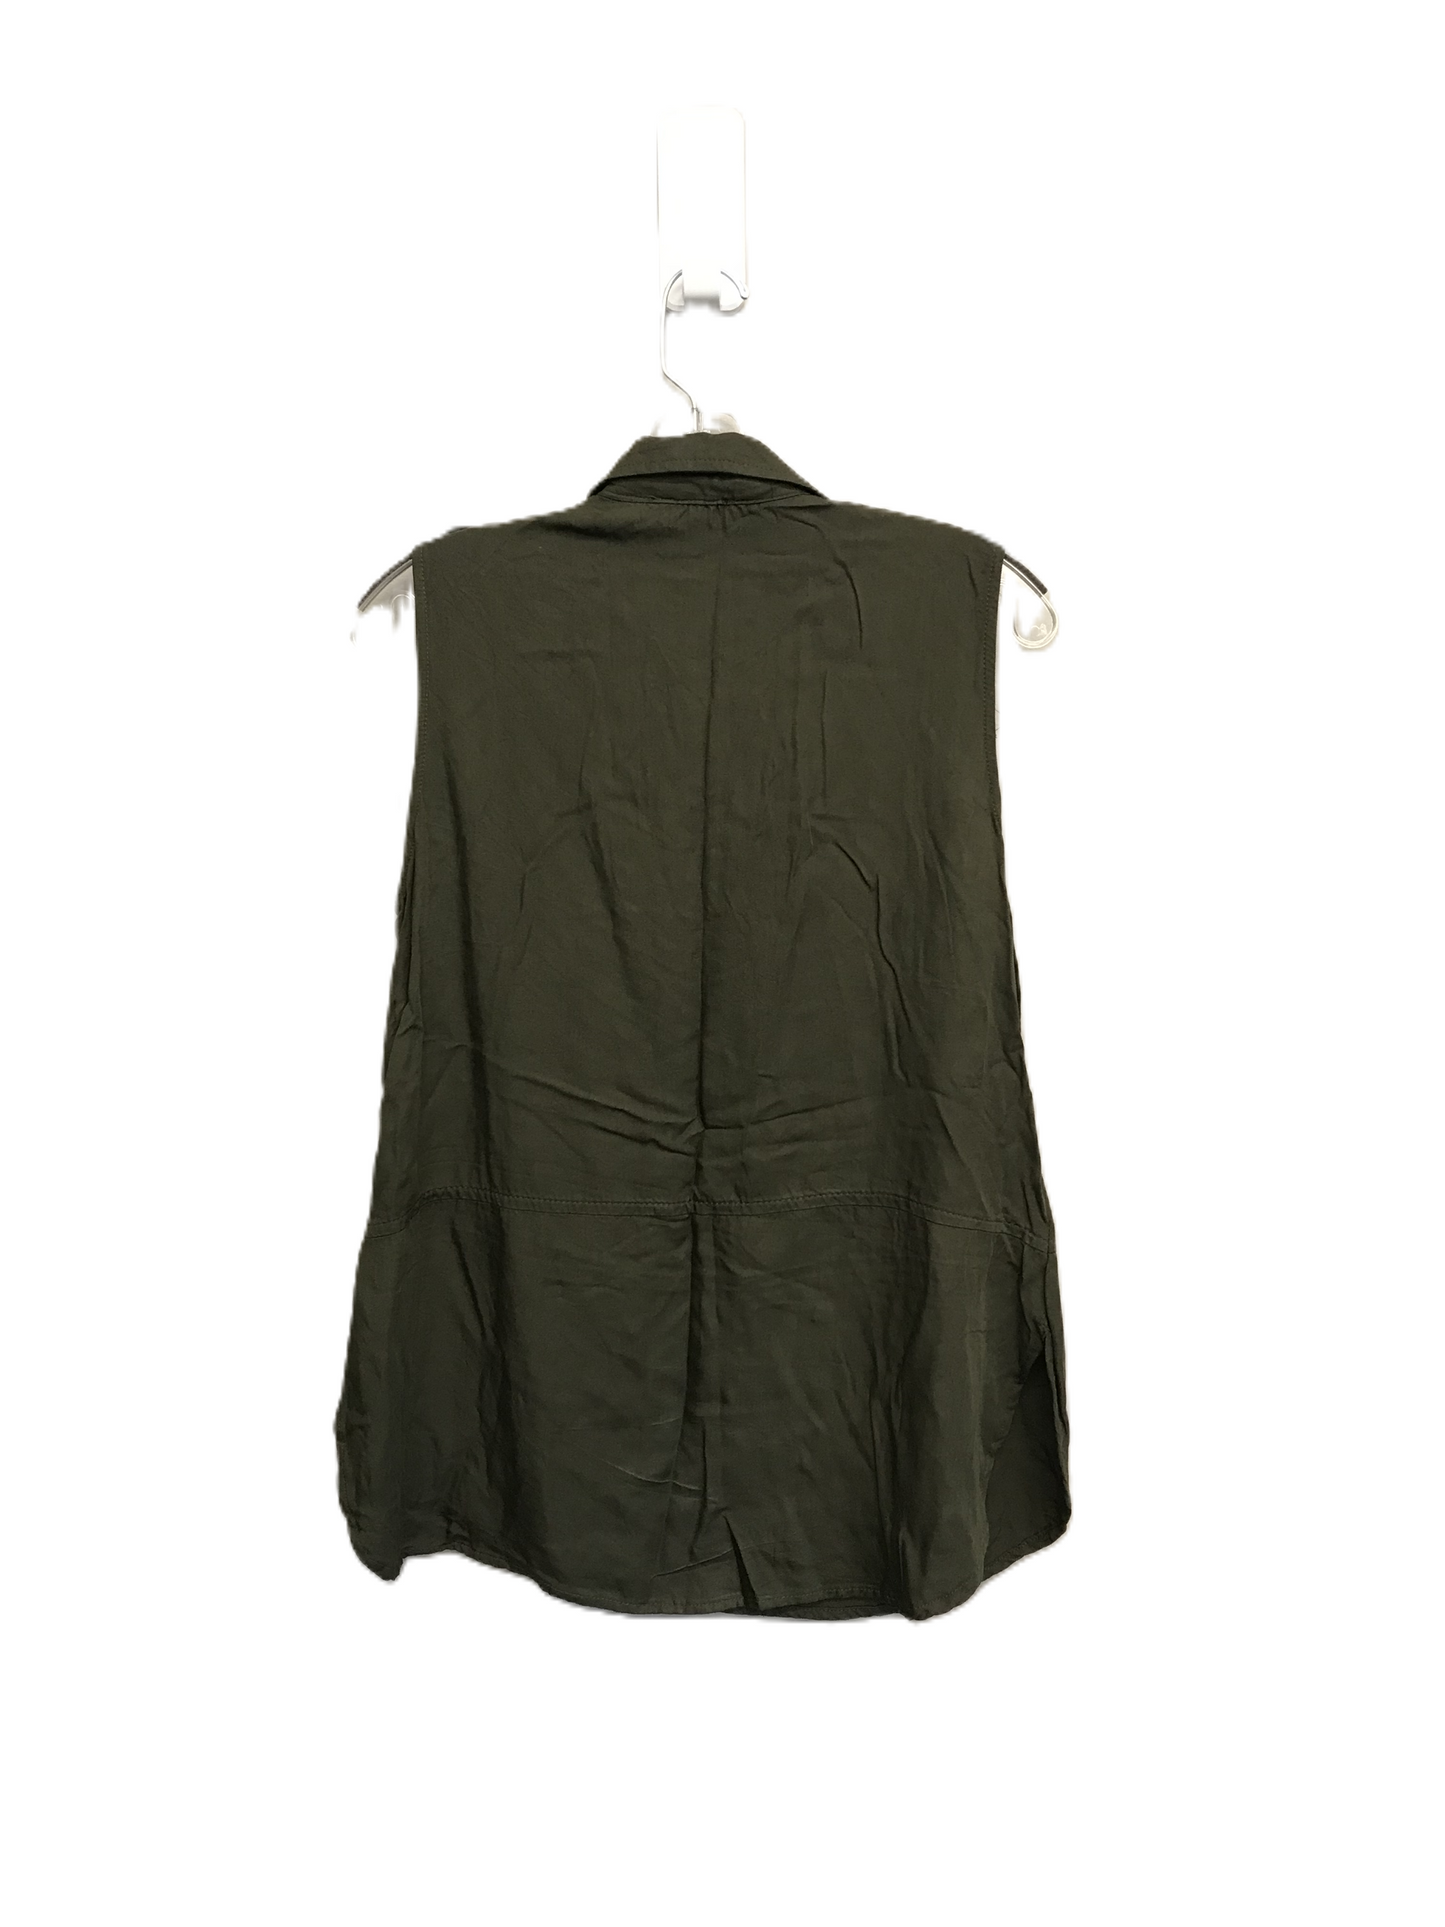 Green Top Sleeveless Basic By Jones New York, Size: M